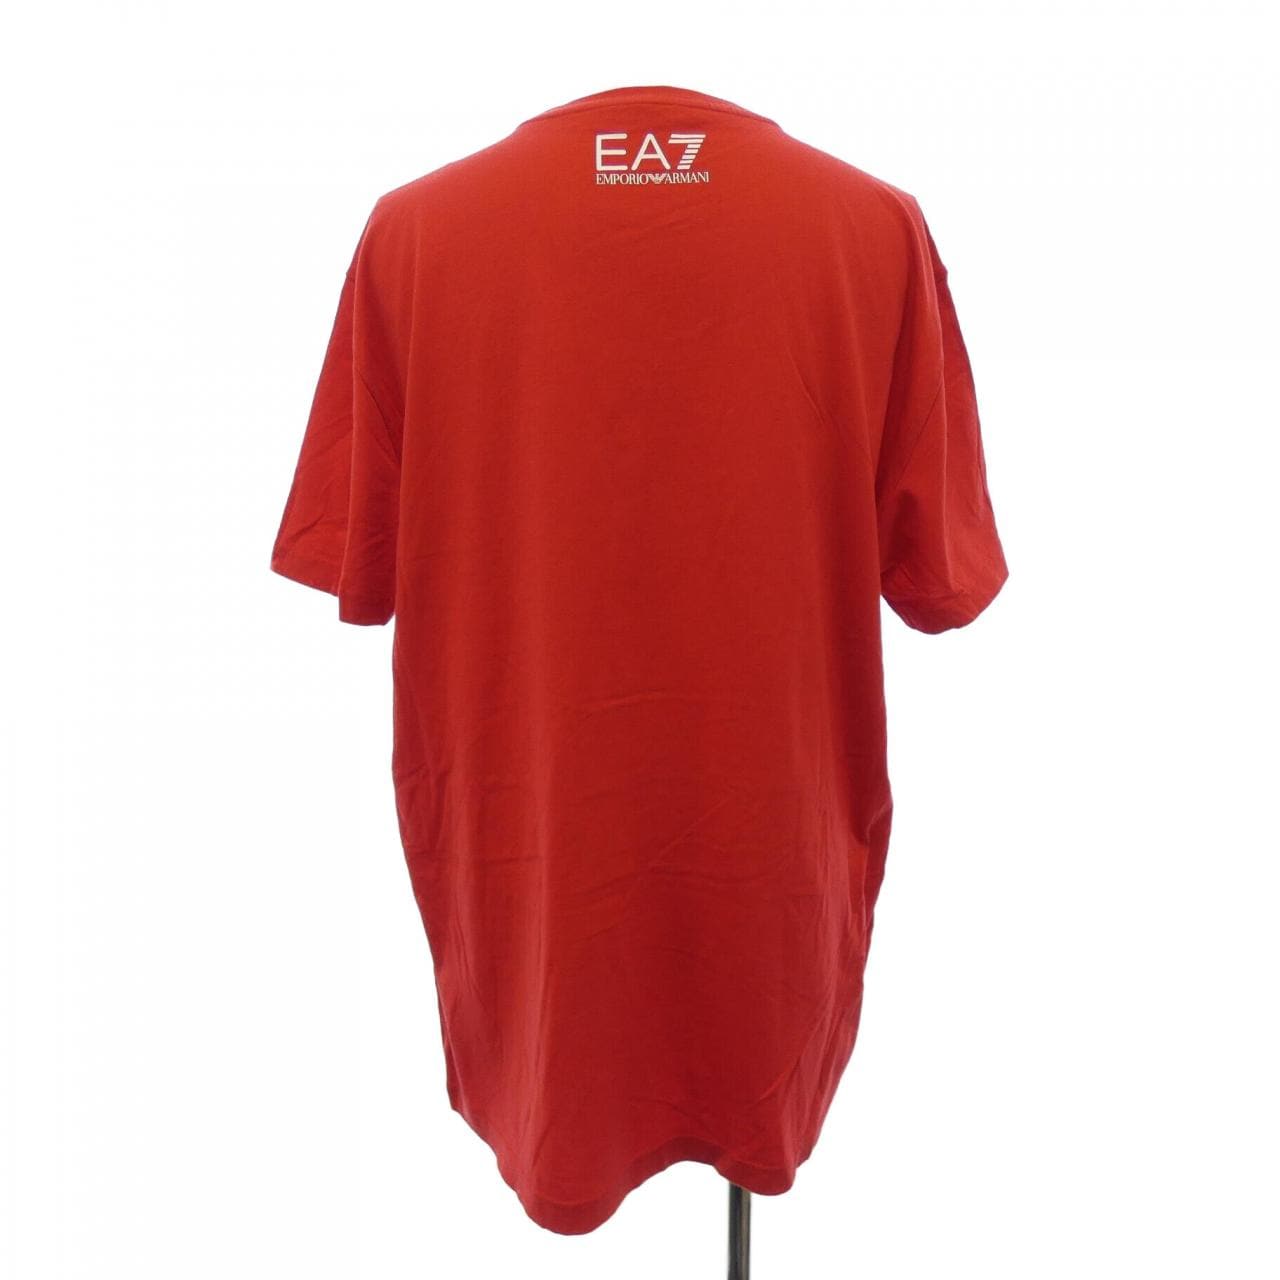 Airset EA7 T-shirt